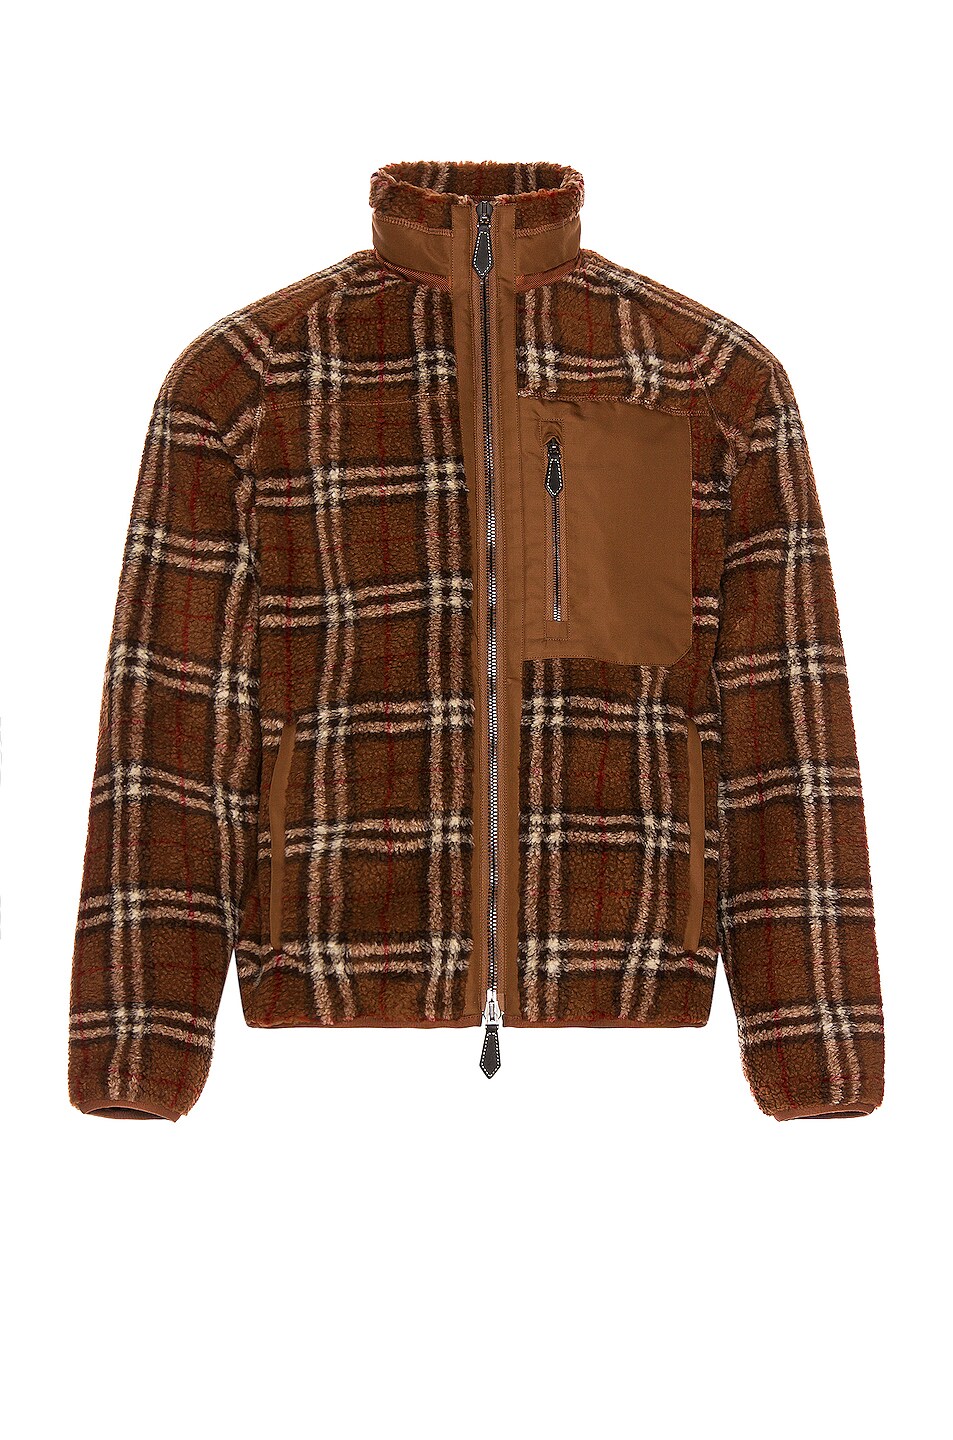 Image 1 of Burberry Dorian Jacket in Dark Birch Brown Check